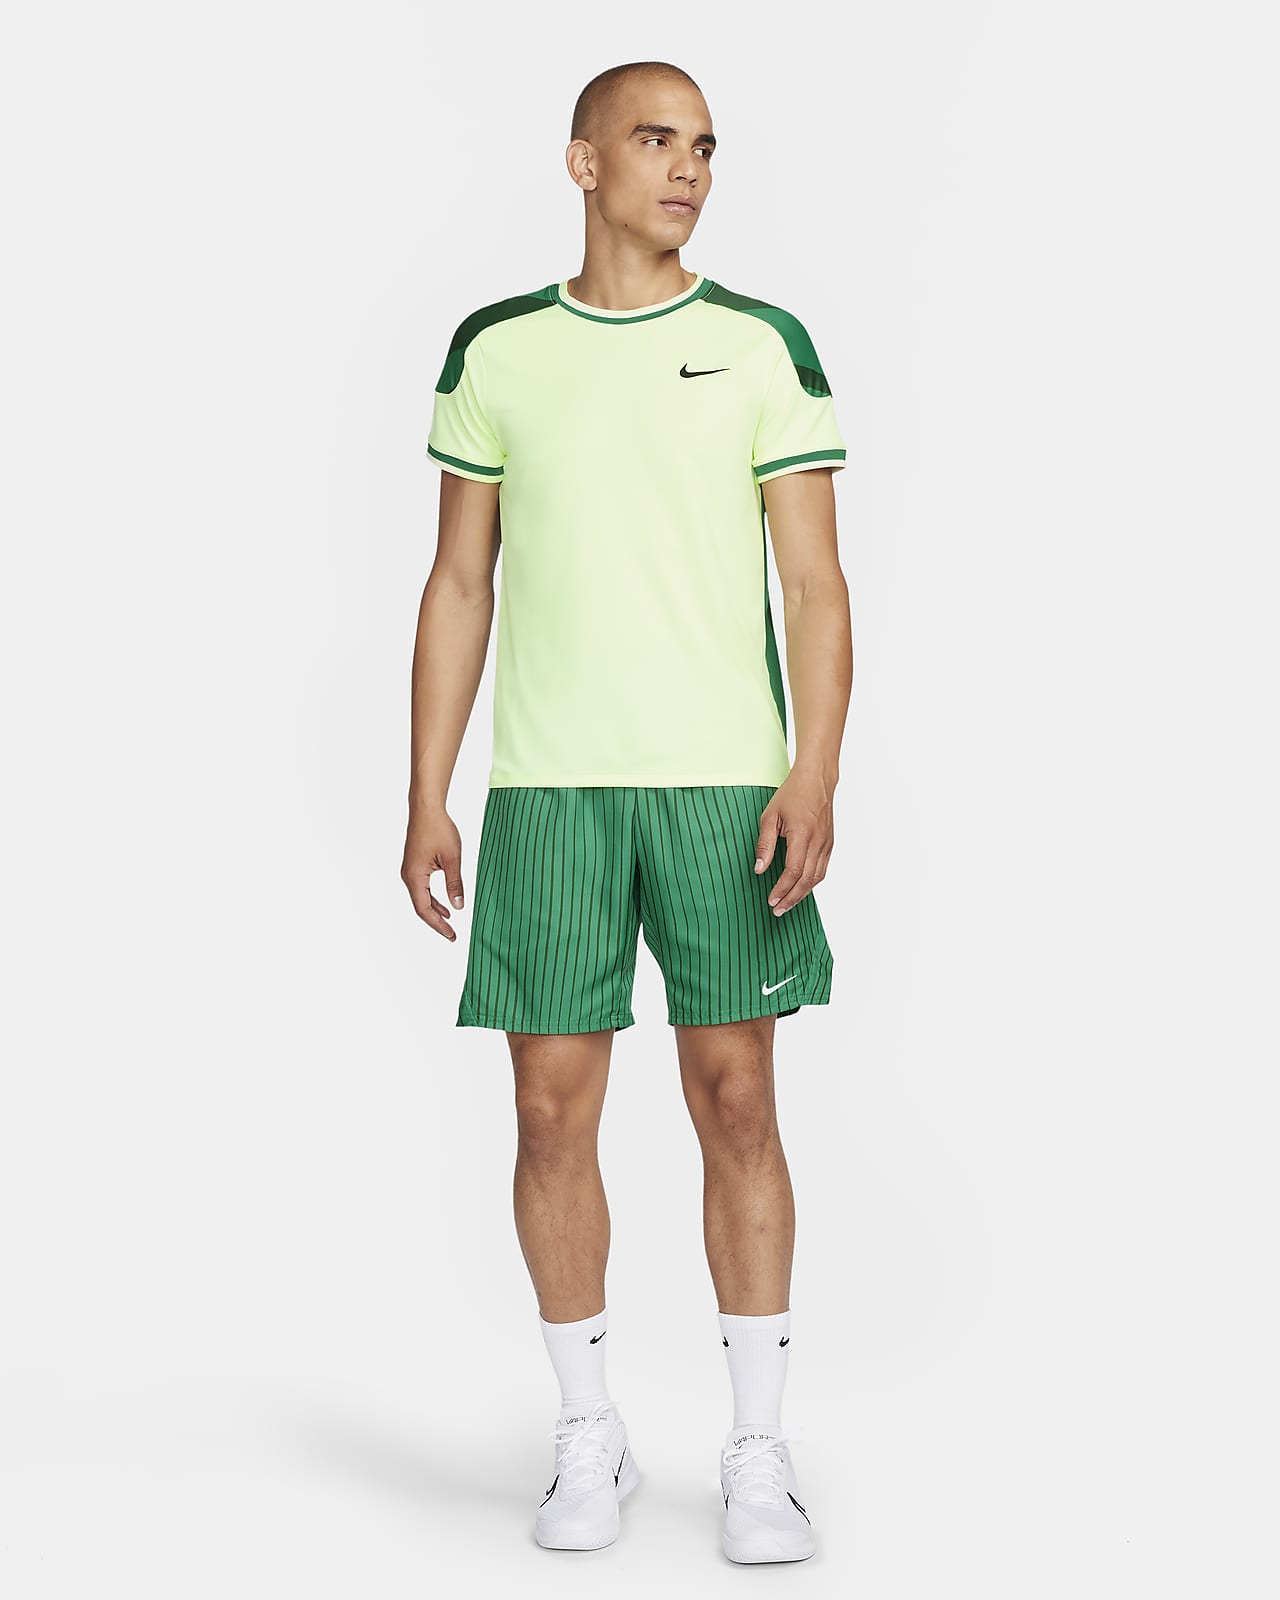 Men's L Slim Nike Court Dri-FIT Slam Tennis Top Crew Neck Shirt